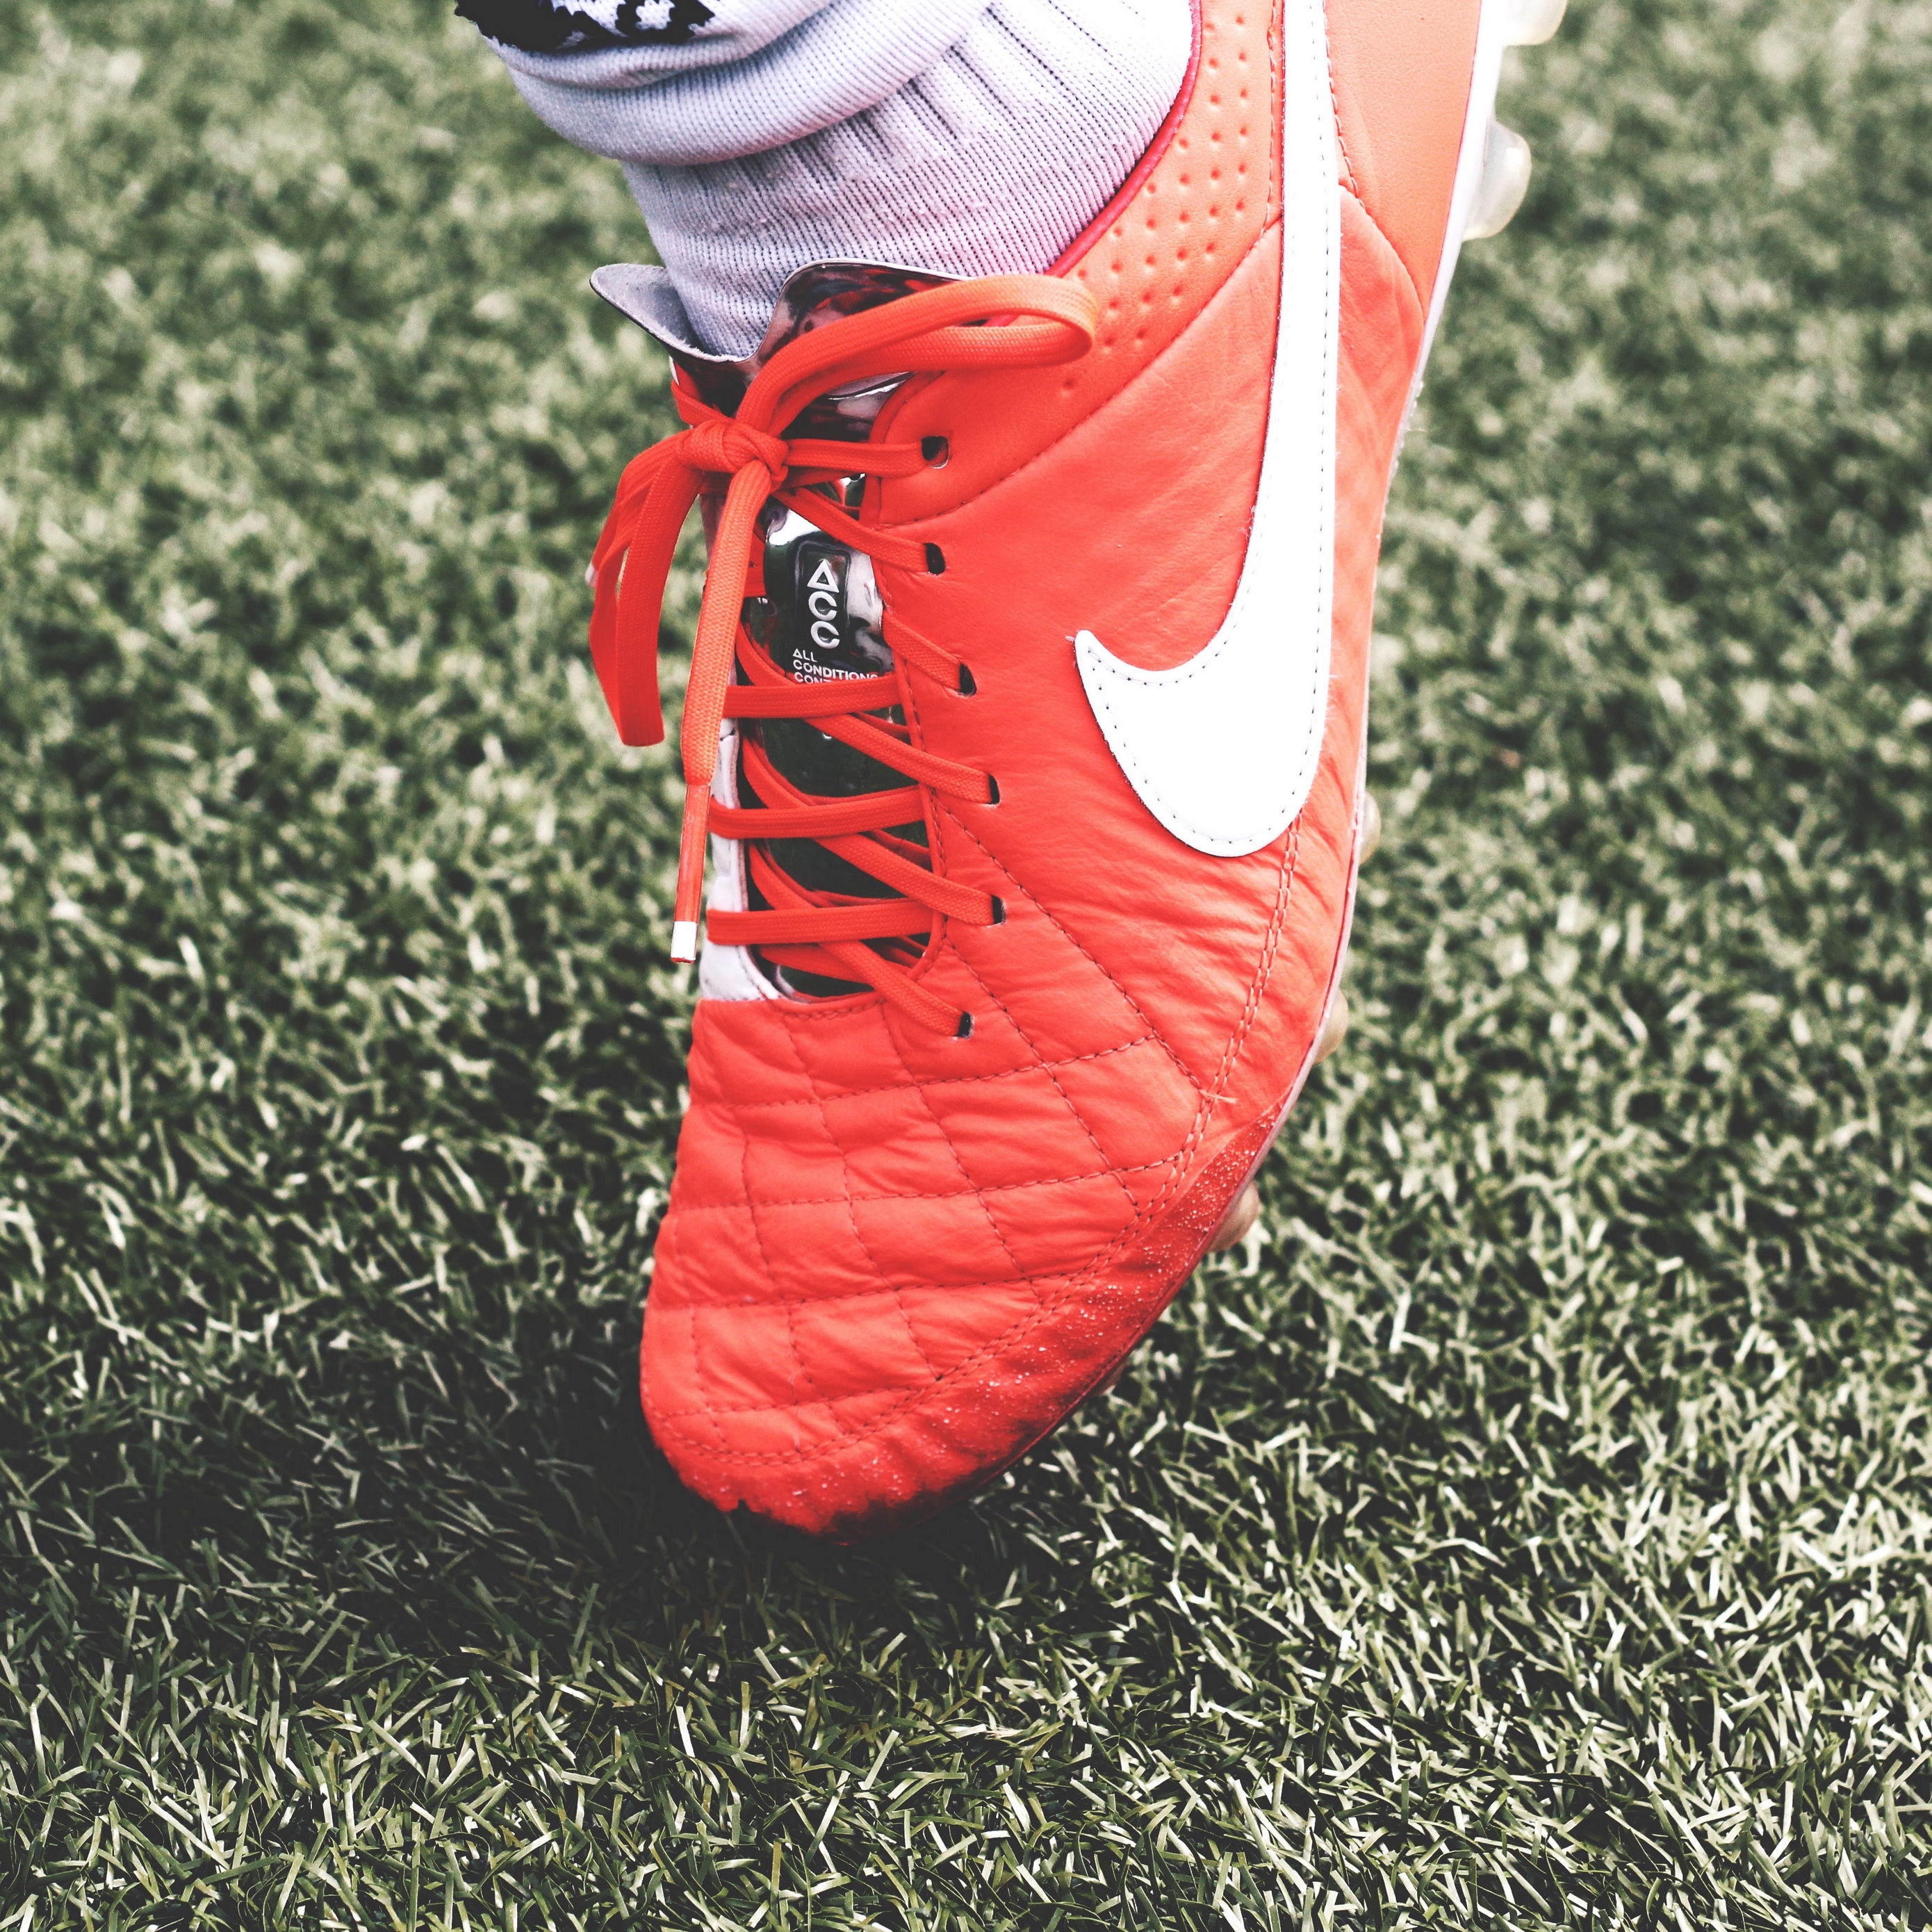 Wallpaper Nike, Football Shoes, Lawn - Nike Mini Football Shoes - HD Wallpaper 